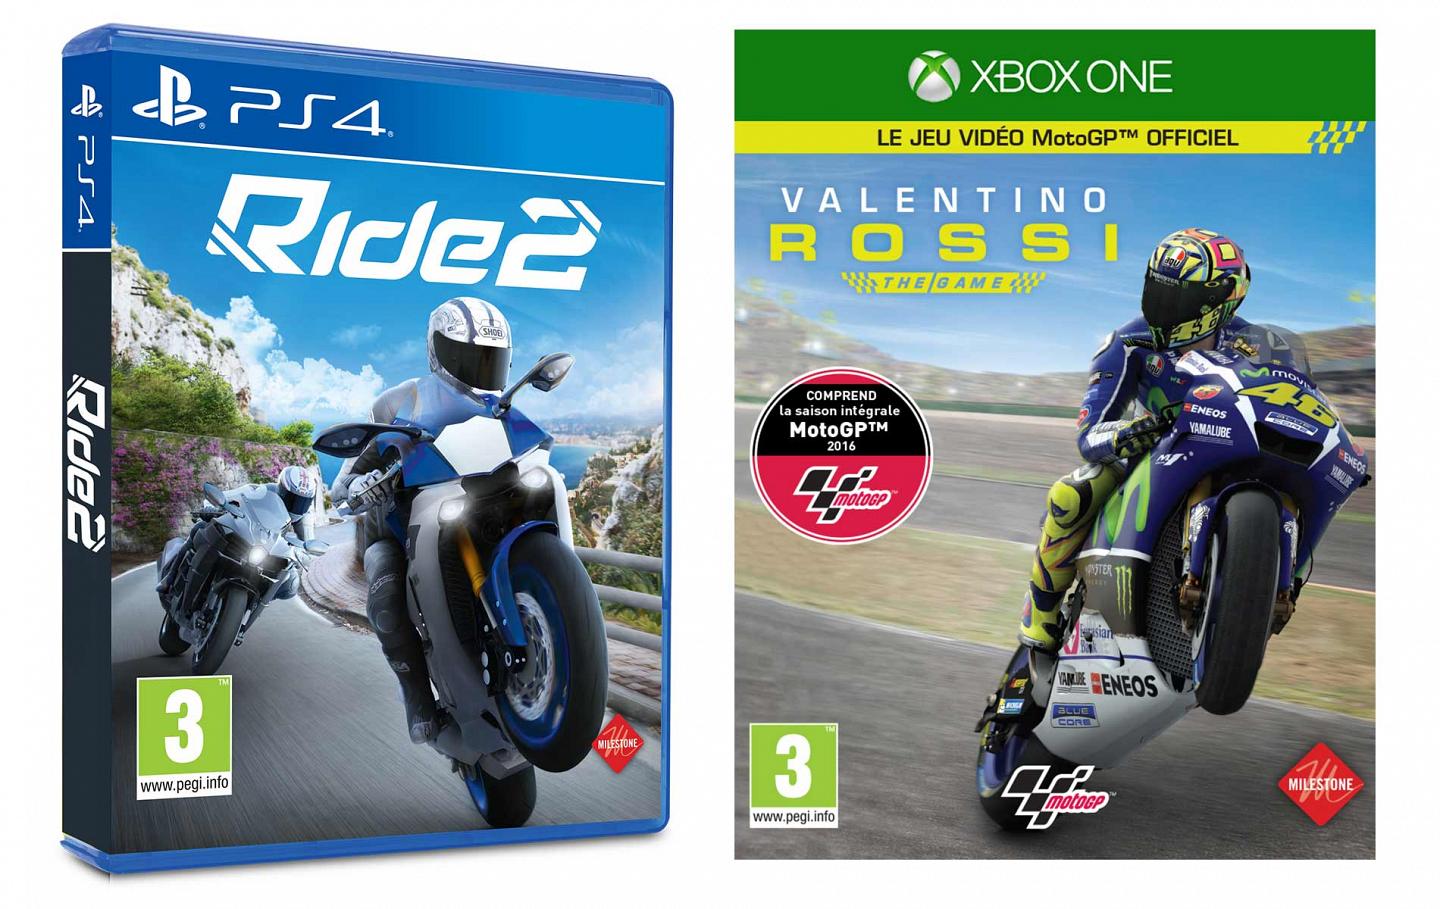 Concours : gagnez un jeu vidéo Ride2 ou Valentino Rossi (...)